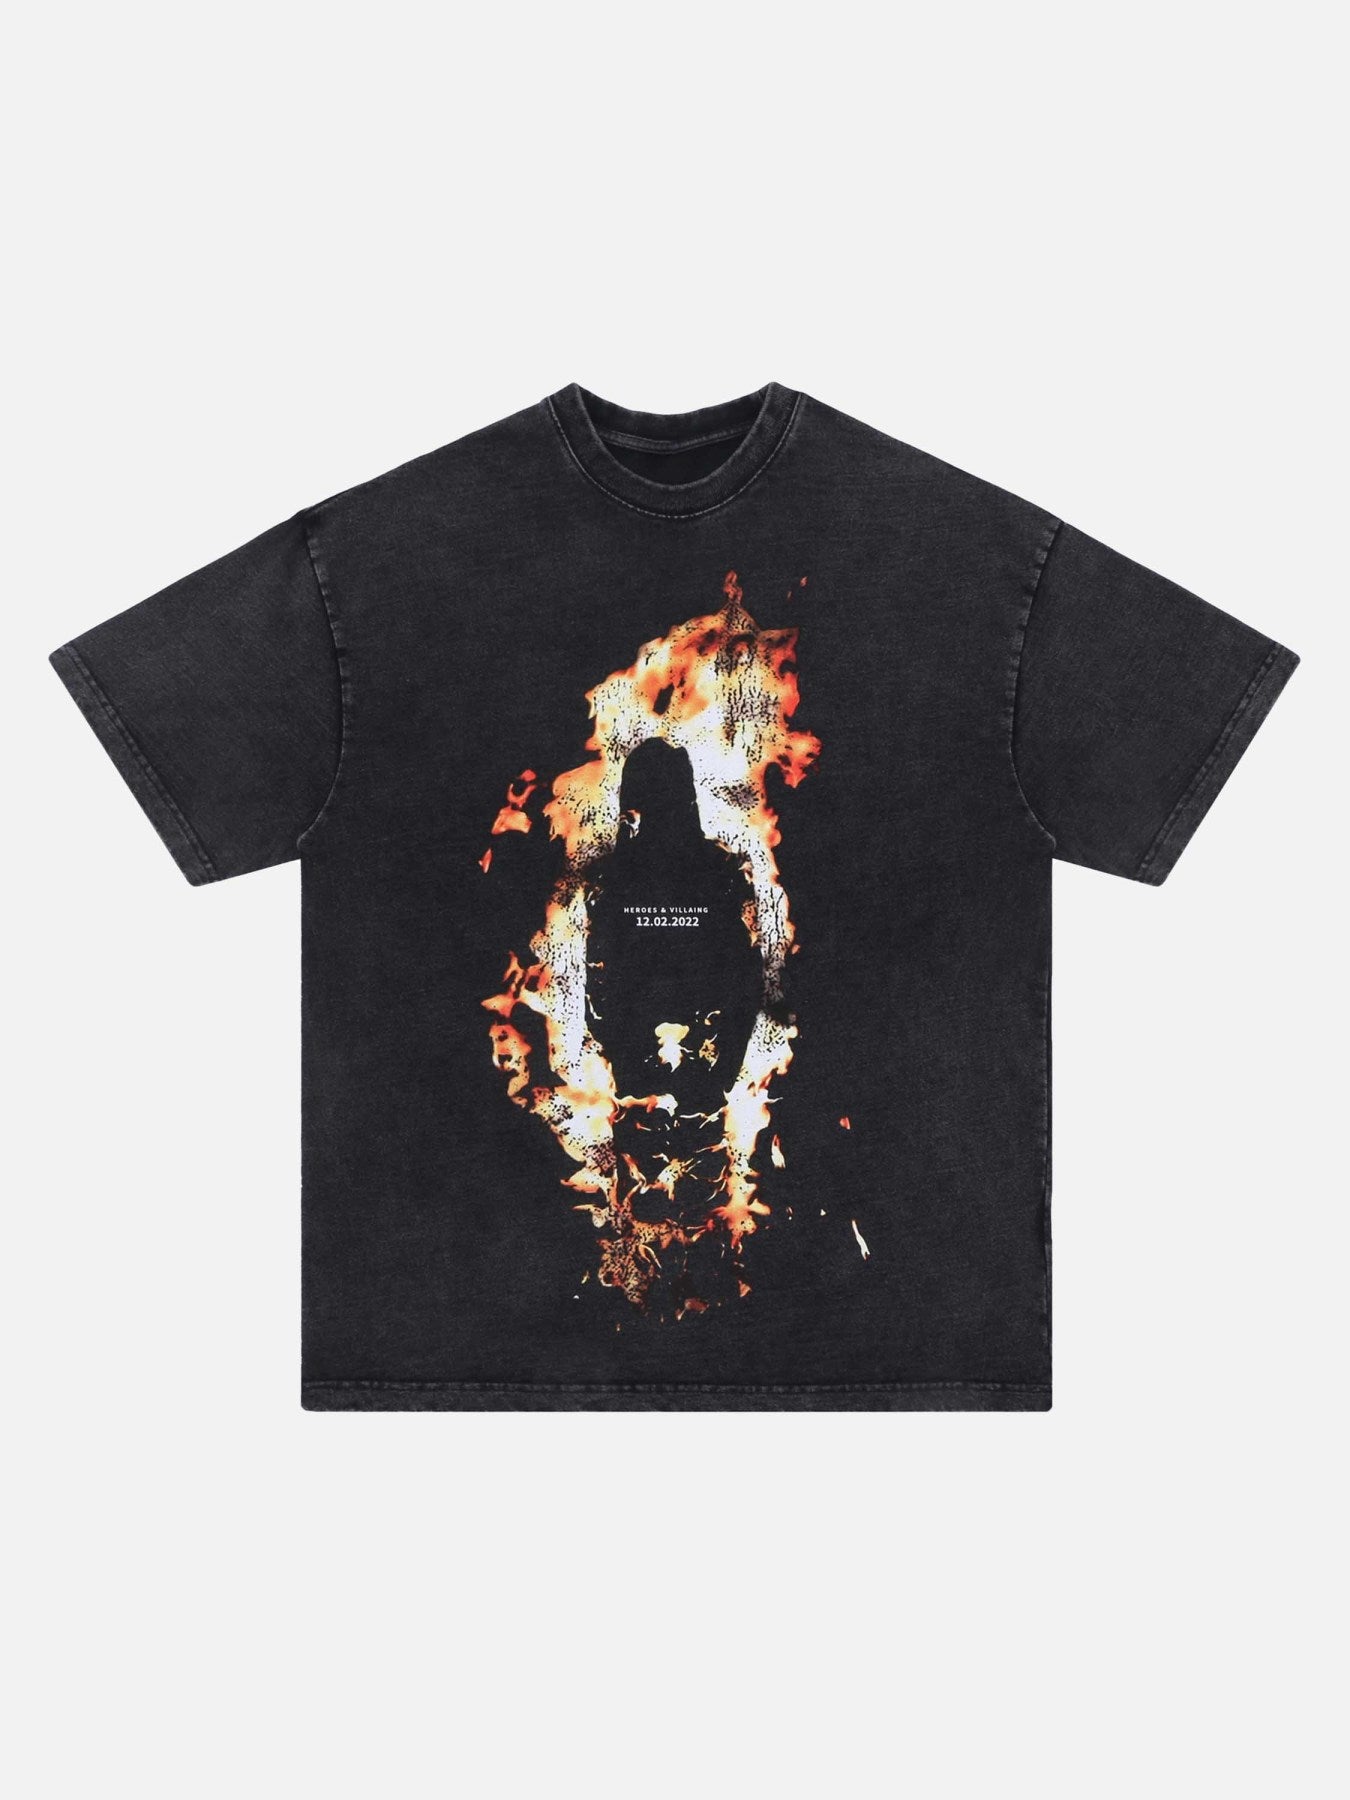 The Supermade Creative Flaming Man Printed T-Shirt